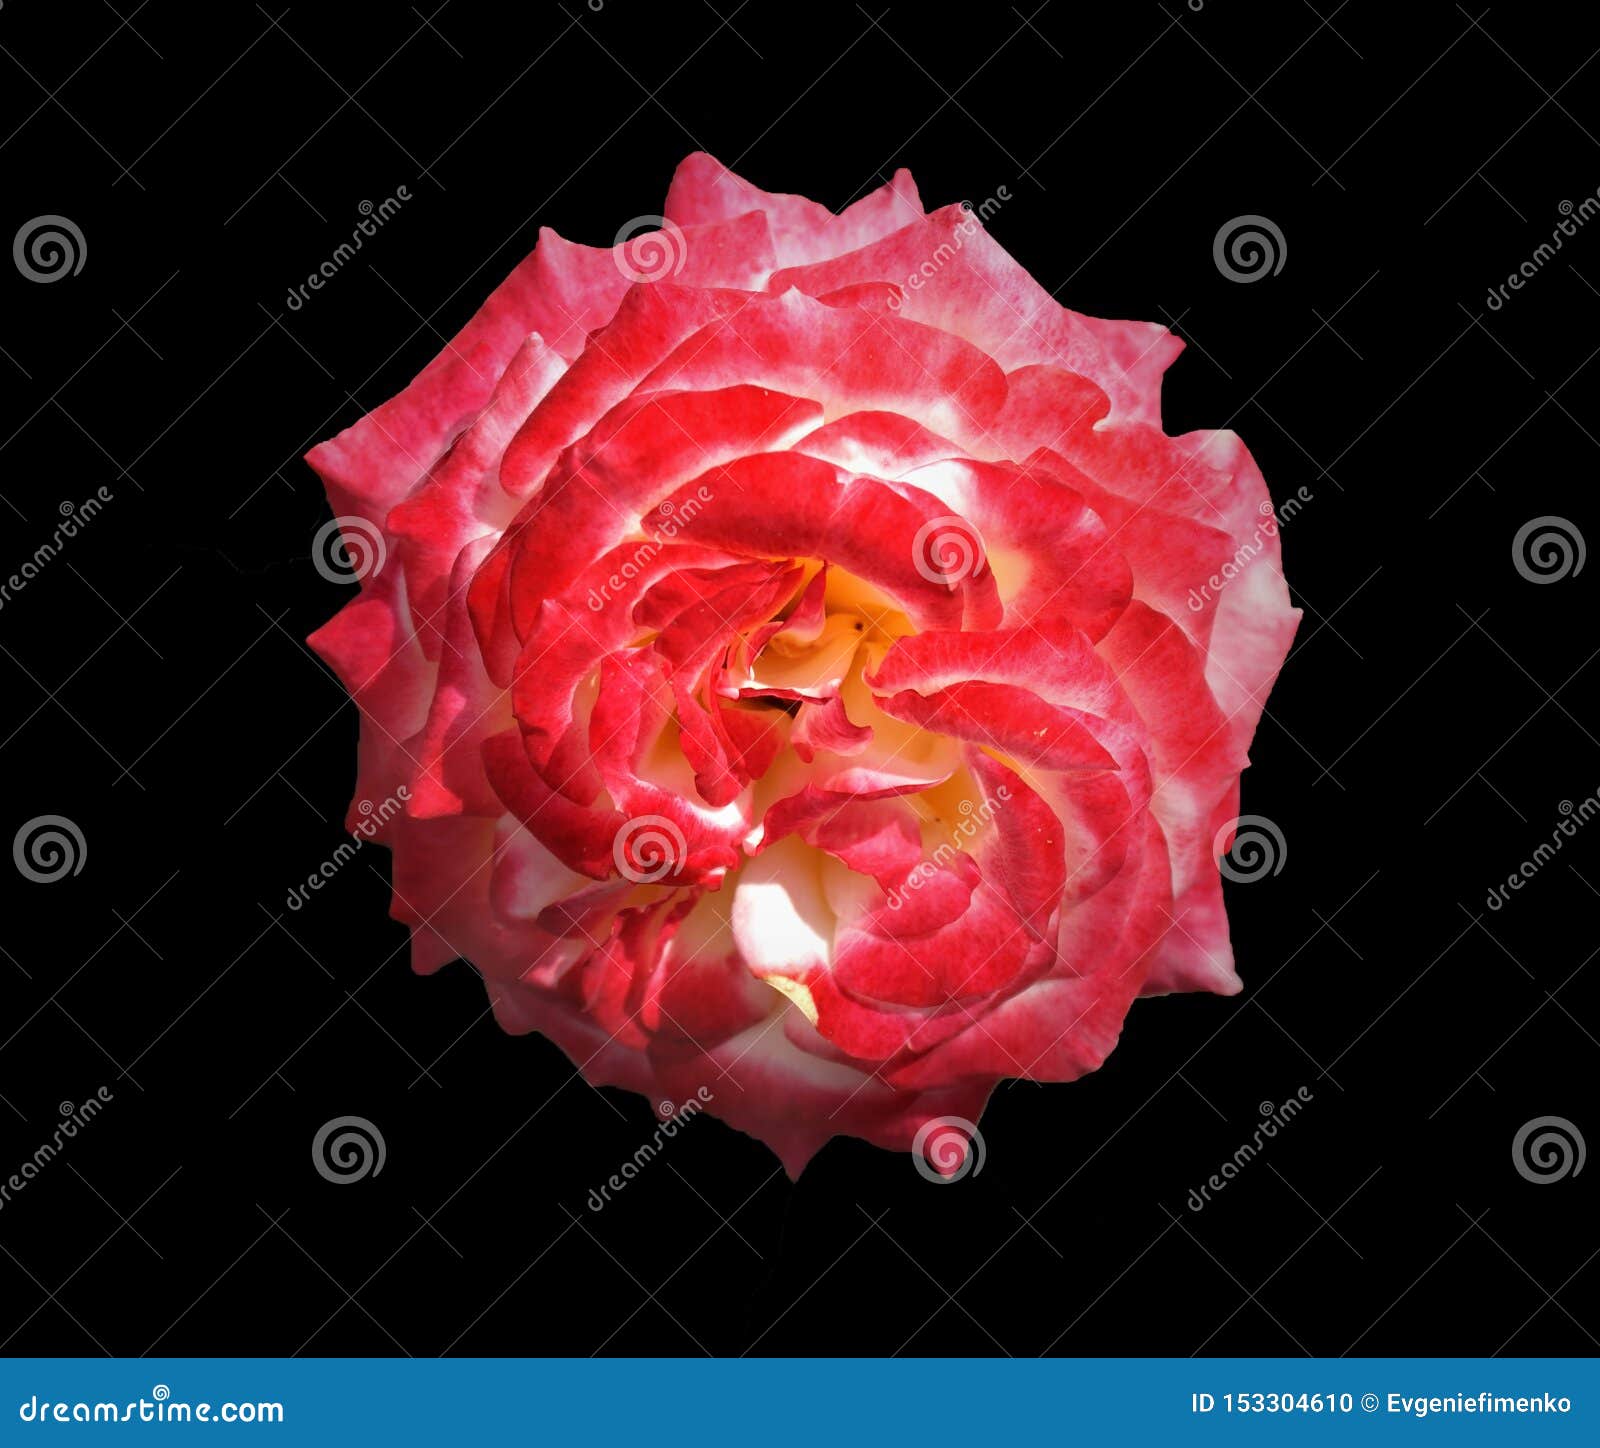 Macro Image Of Isolated Flower Of Grandiflora Rose Stock Photo Image Of Plants Black 153304610